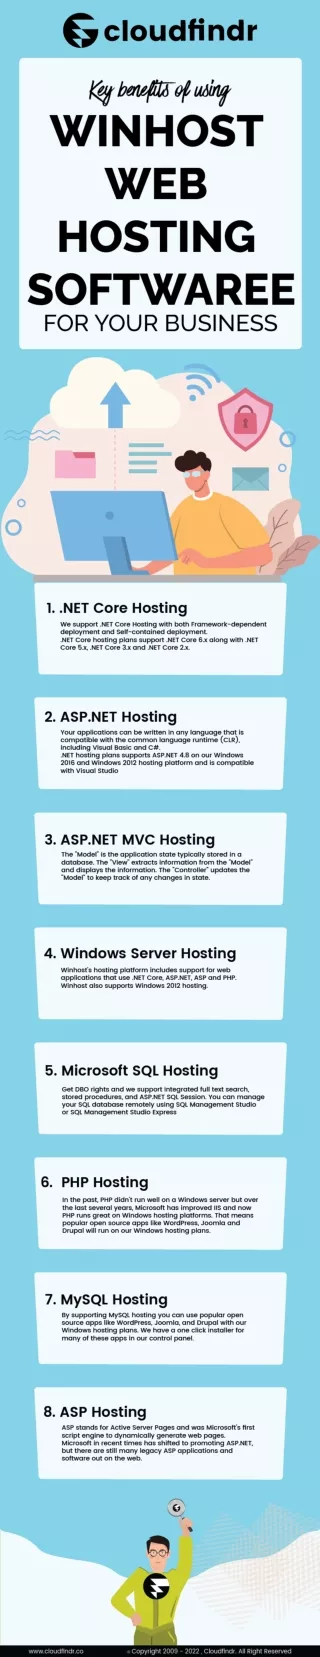 Key benefits of using Winhost web hosting software